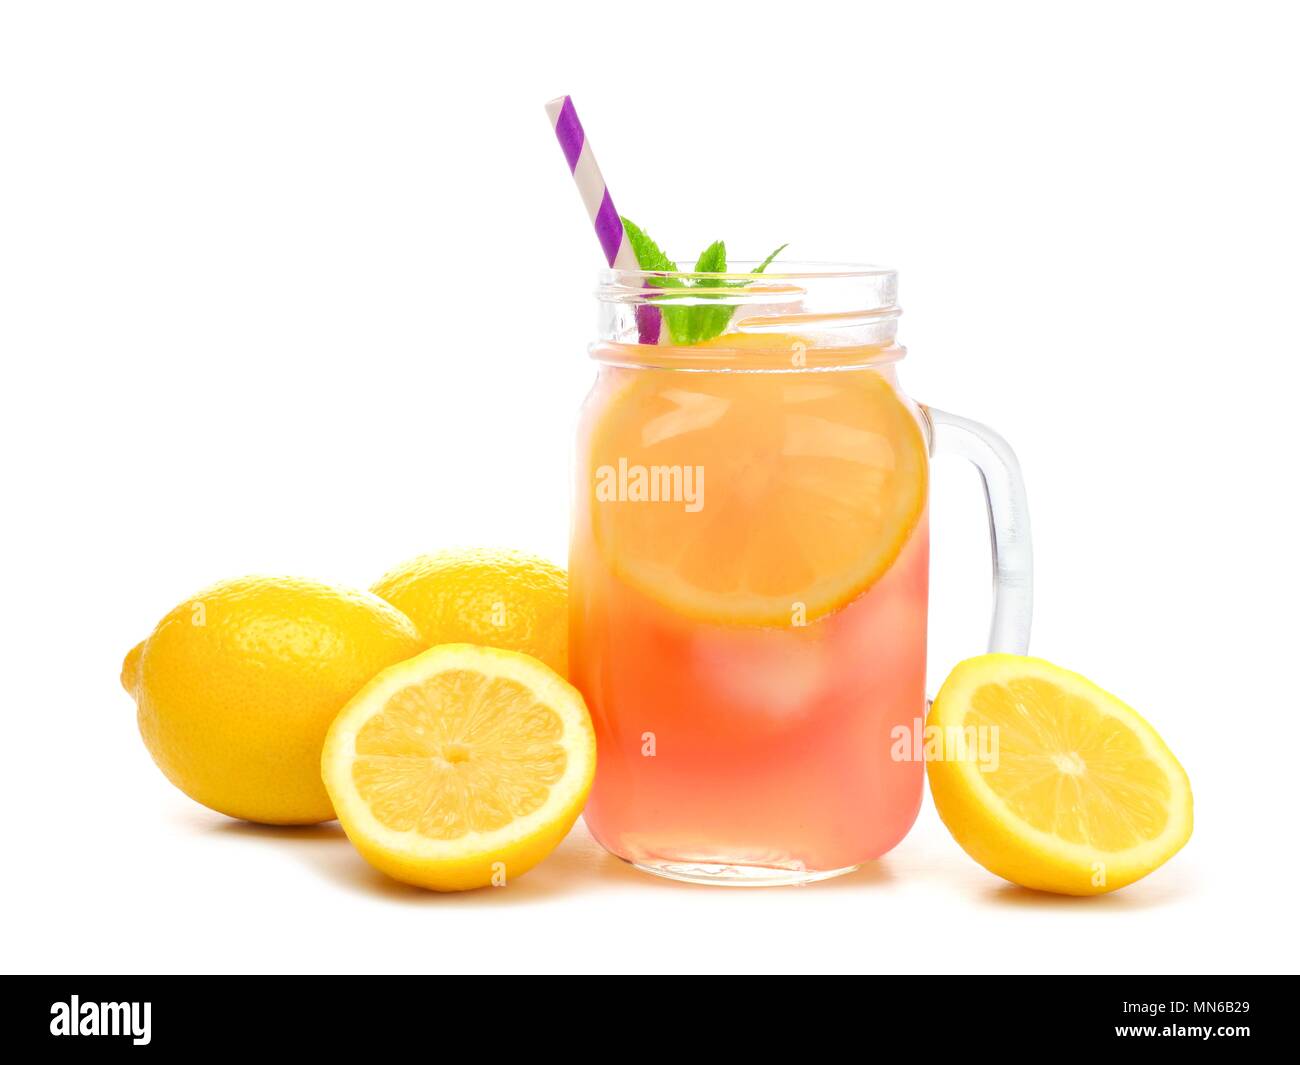 New! Lemon Straw Charms Lemonade Mason Jar Shaped Drinking Straw